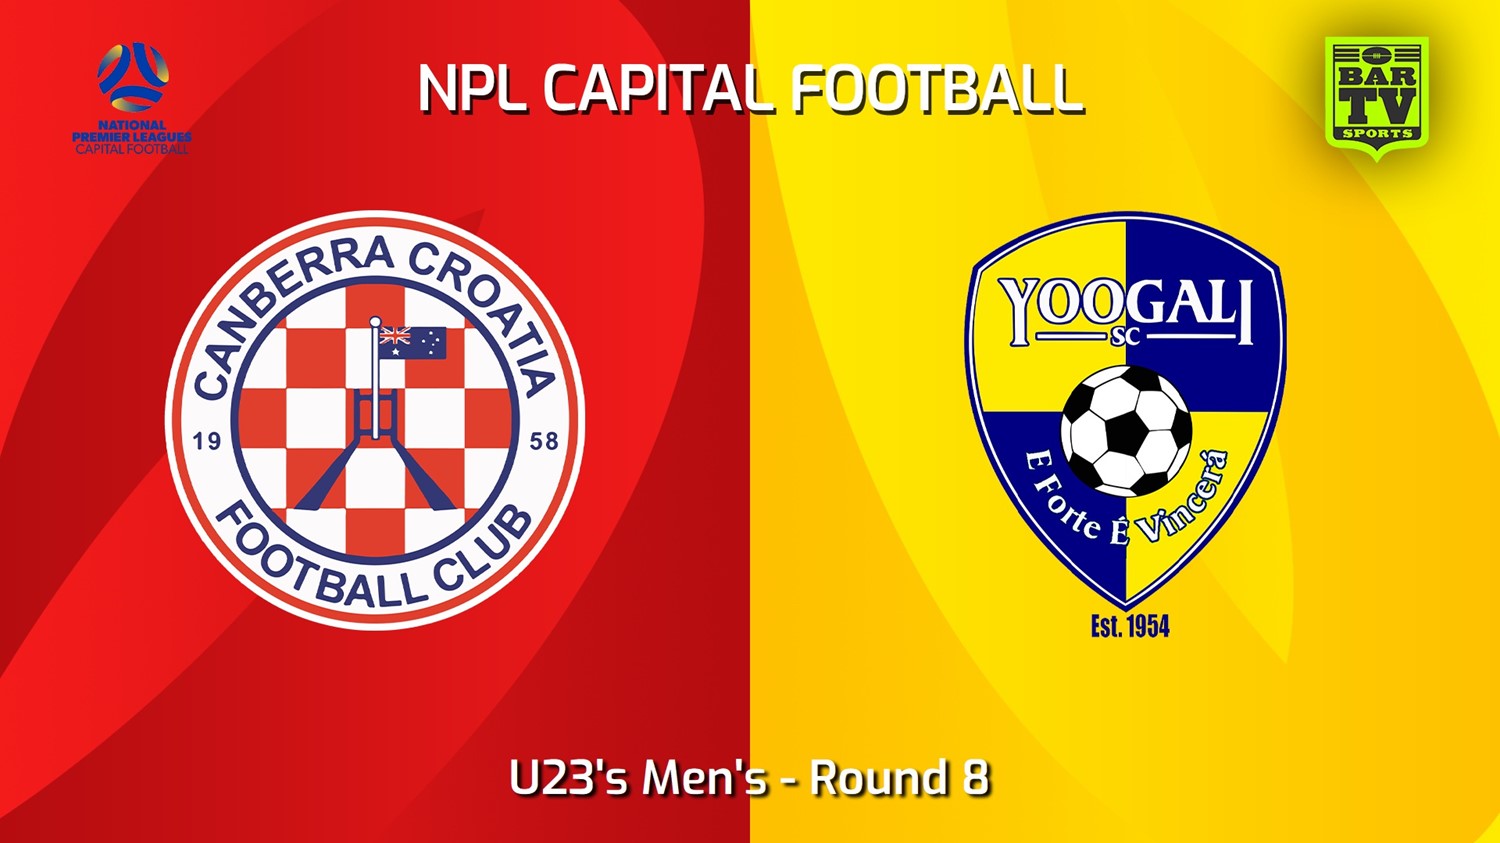 240526-video-Capital NPL U23 Round 8 - Canberra Croatia FC U23 v Yoogali SC U23 Slate Image